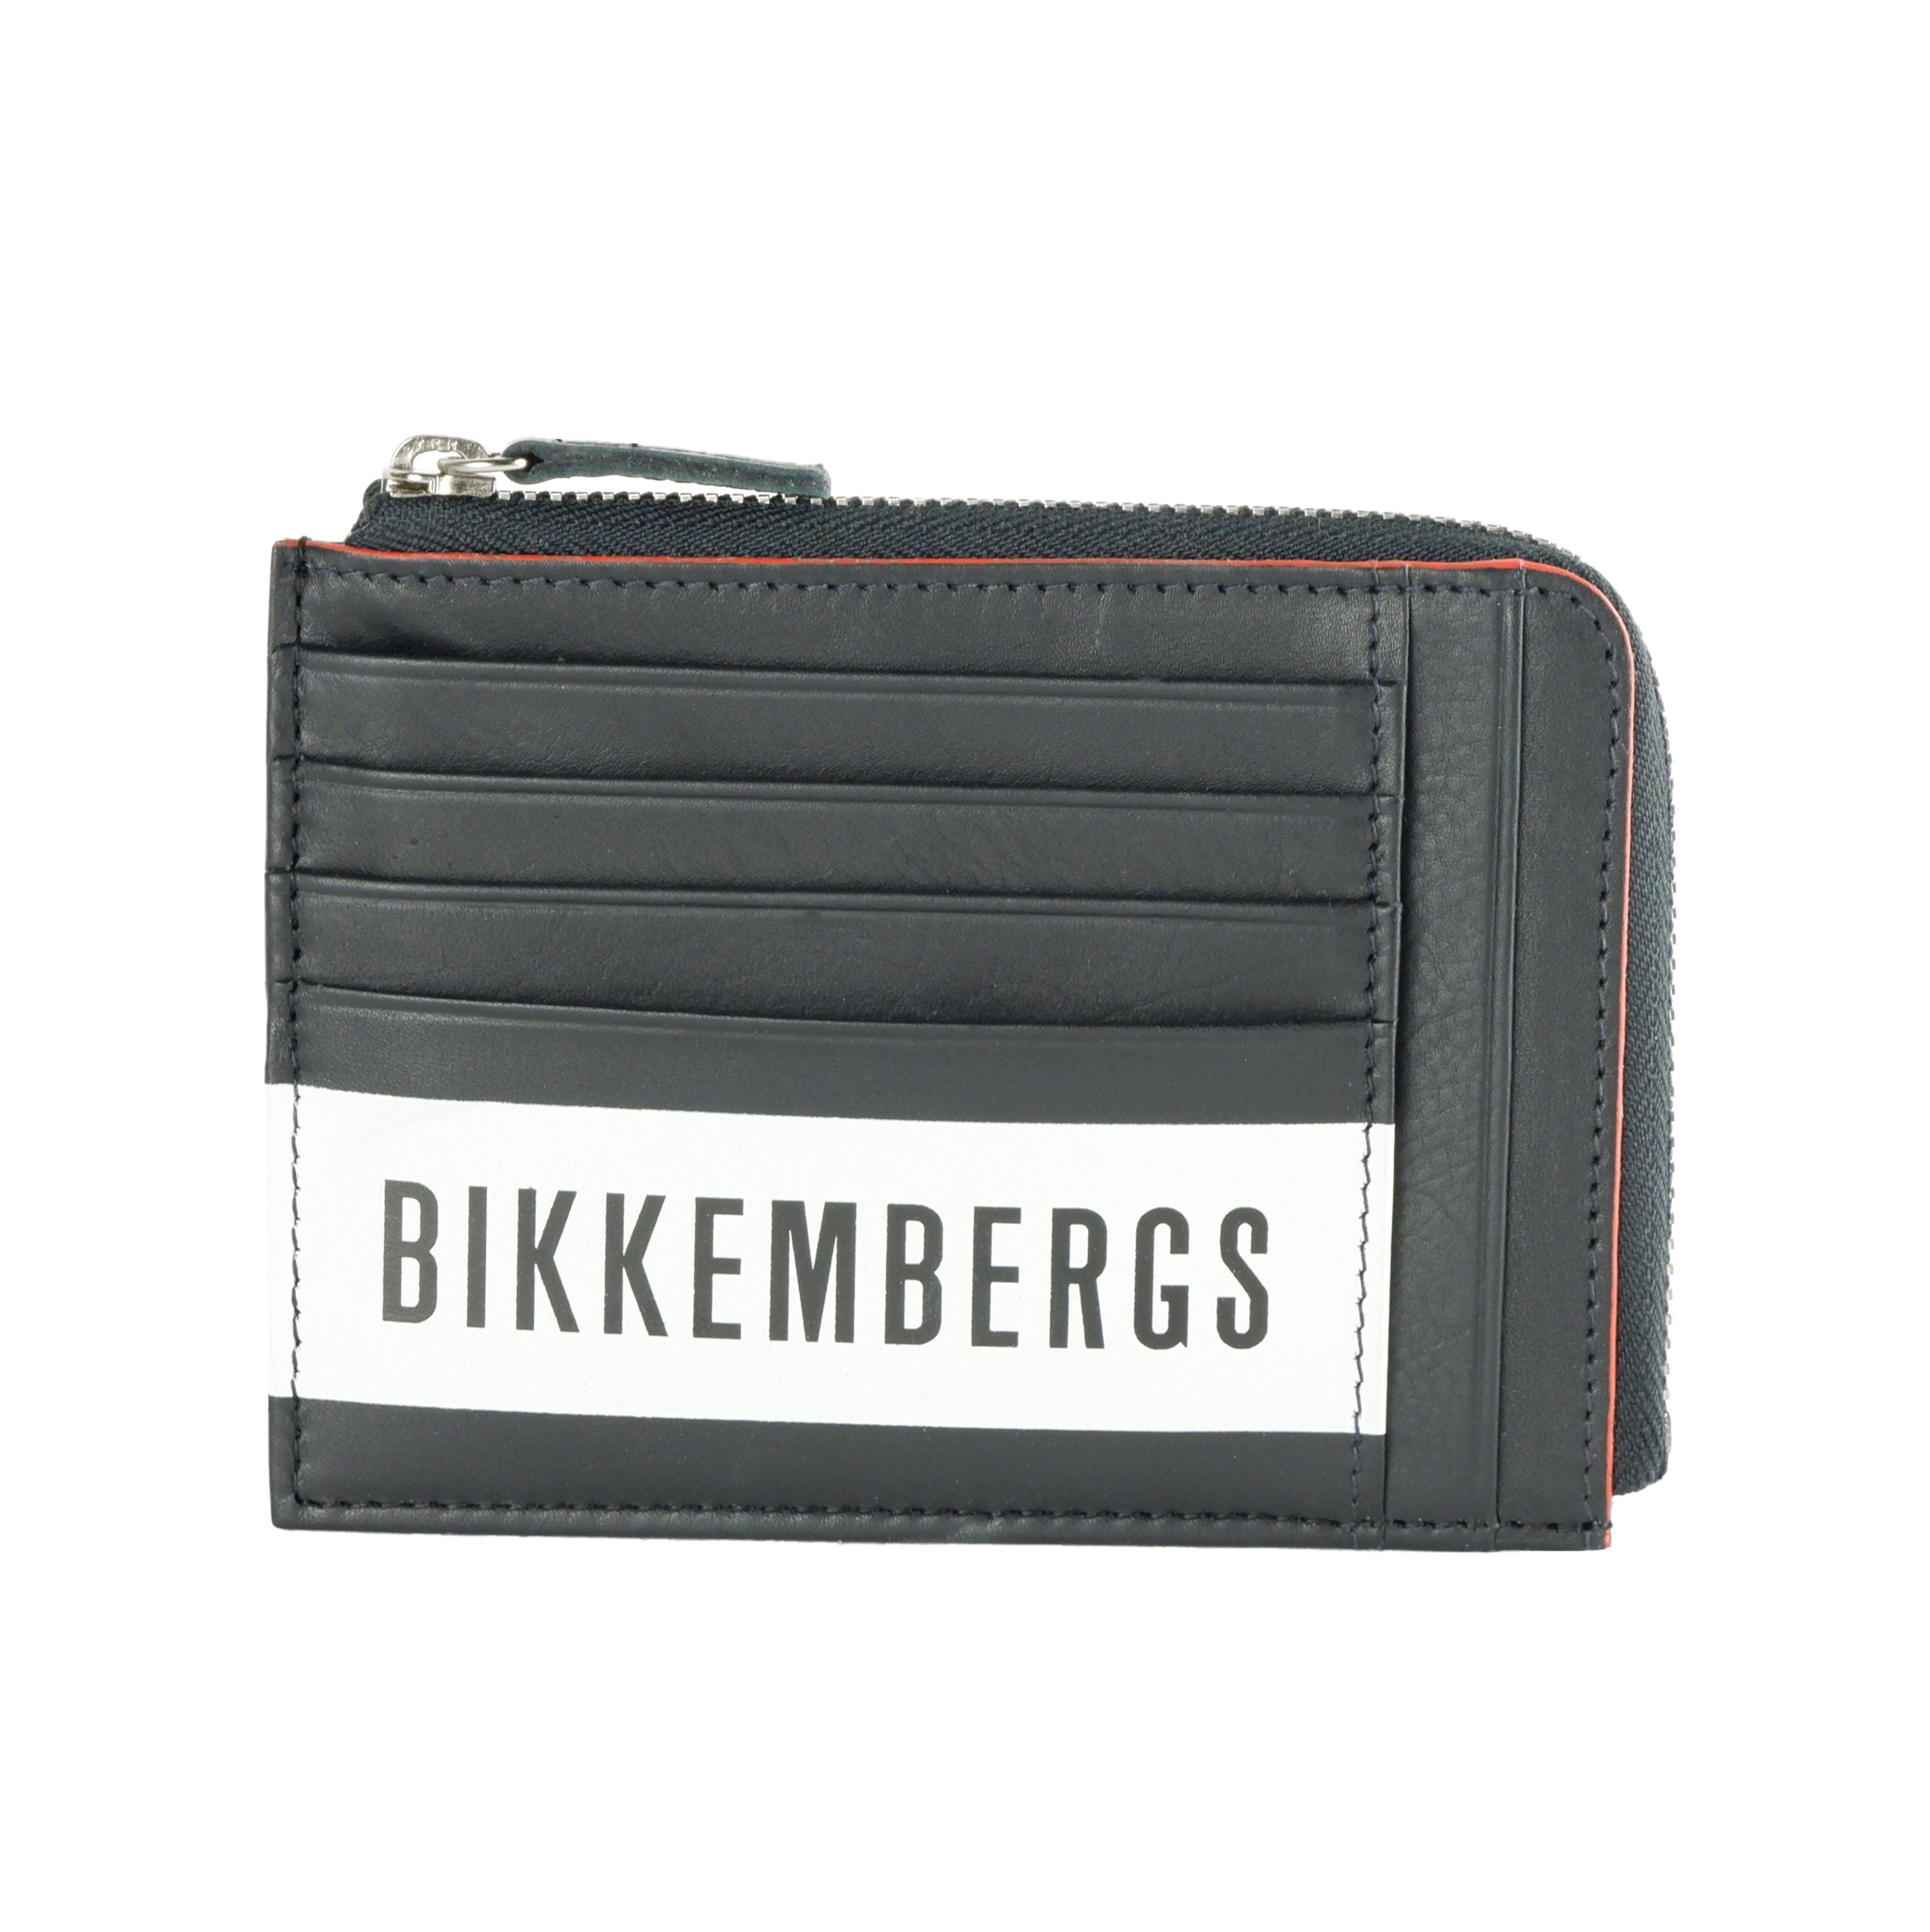 El.- Bikkembergs Wallet